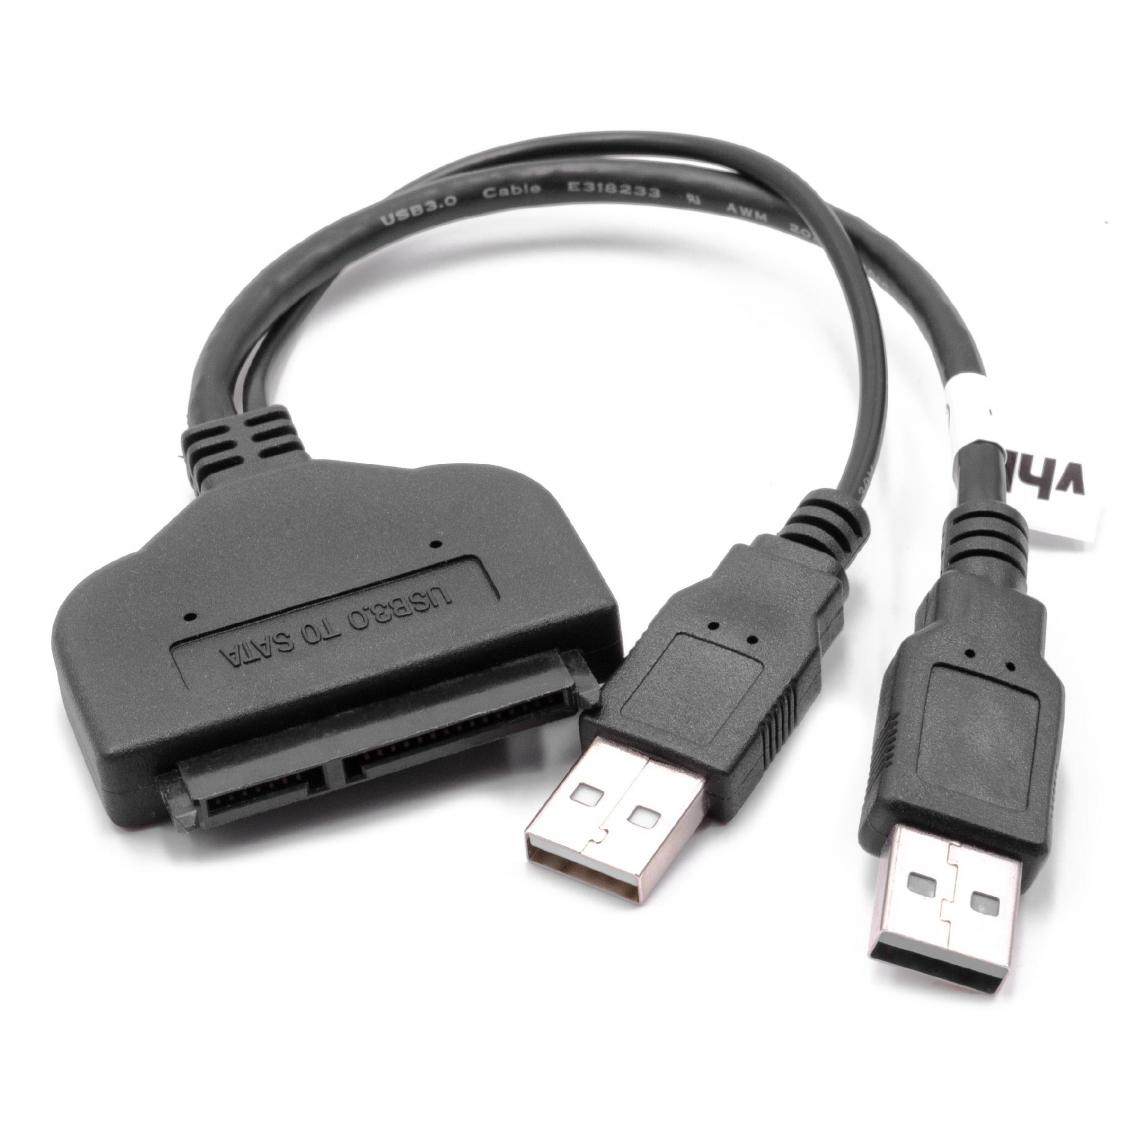 Vhbw - vhbw SATA III vers USB 3.0 Câble de raccordement pour disque dur 2'5" HDD, SSD Plug & Play noir - Accessoires alimentation